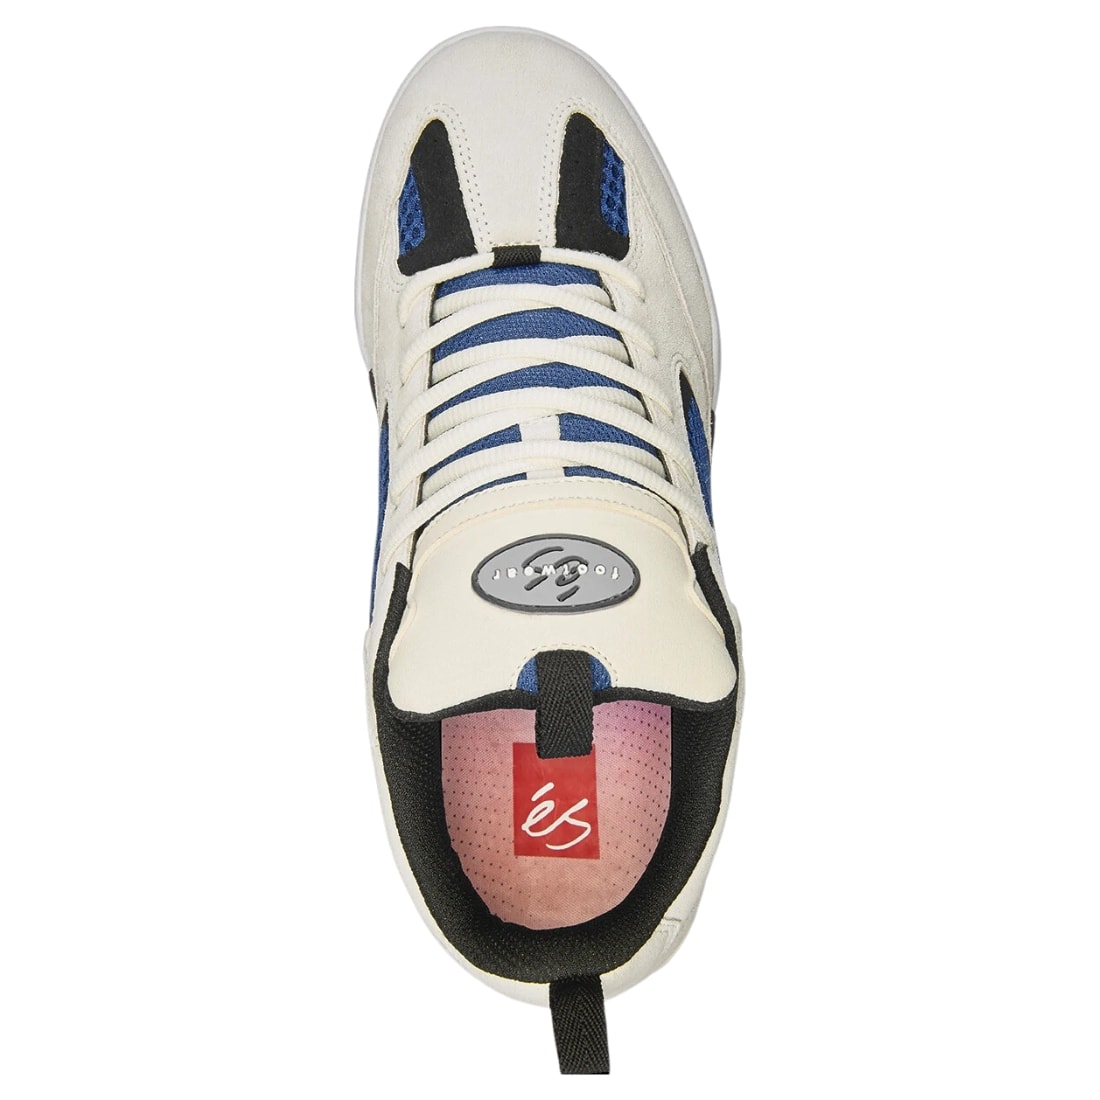 Es Quattro Skate Shoes - White/Blue/Black - Mens Skate Shoes by eS